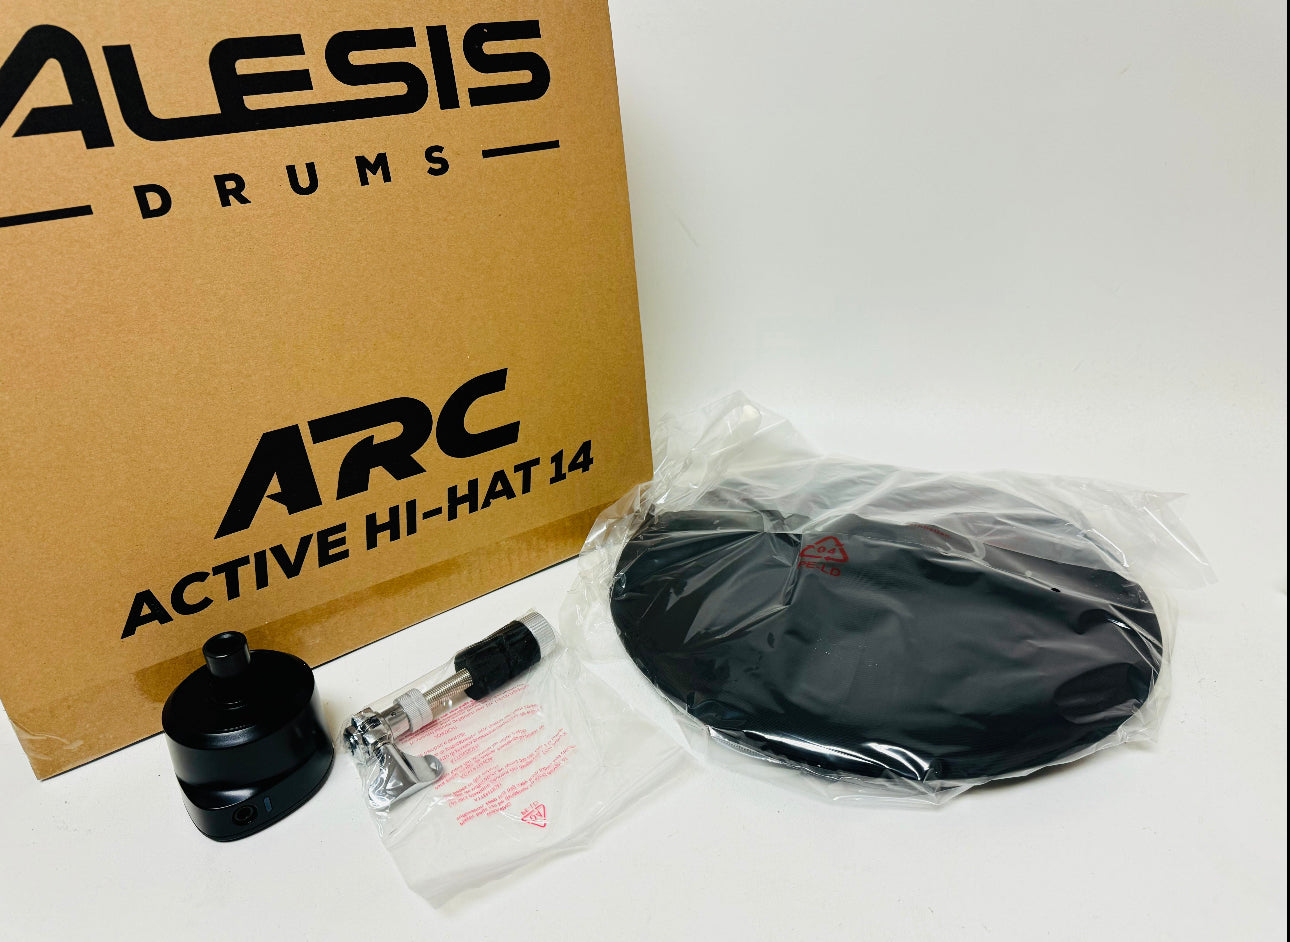 Alesis Strata Prime Drum Module and Hi Hat Cymbal OPEN BOX